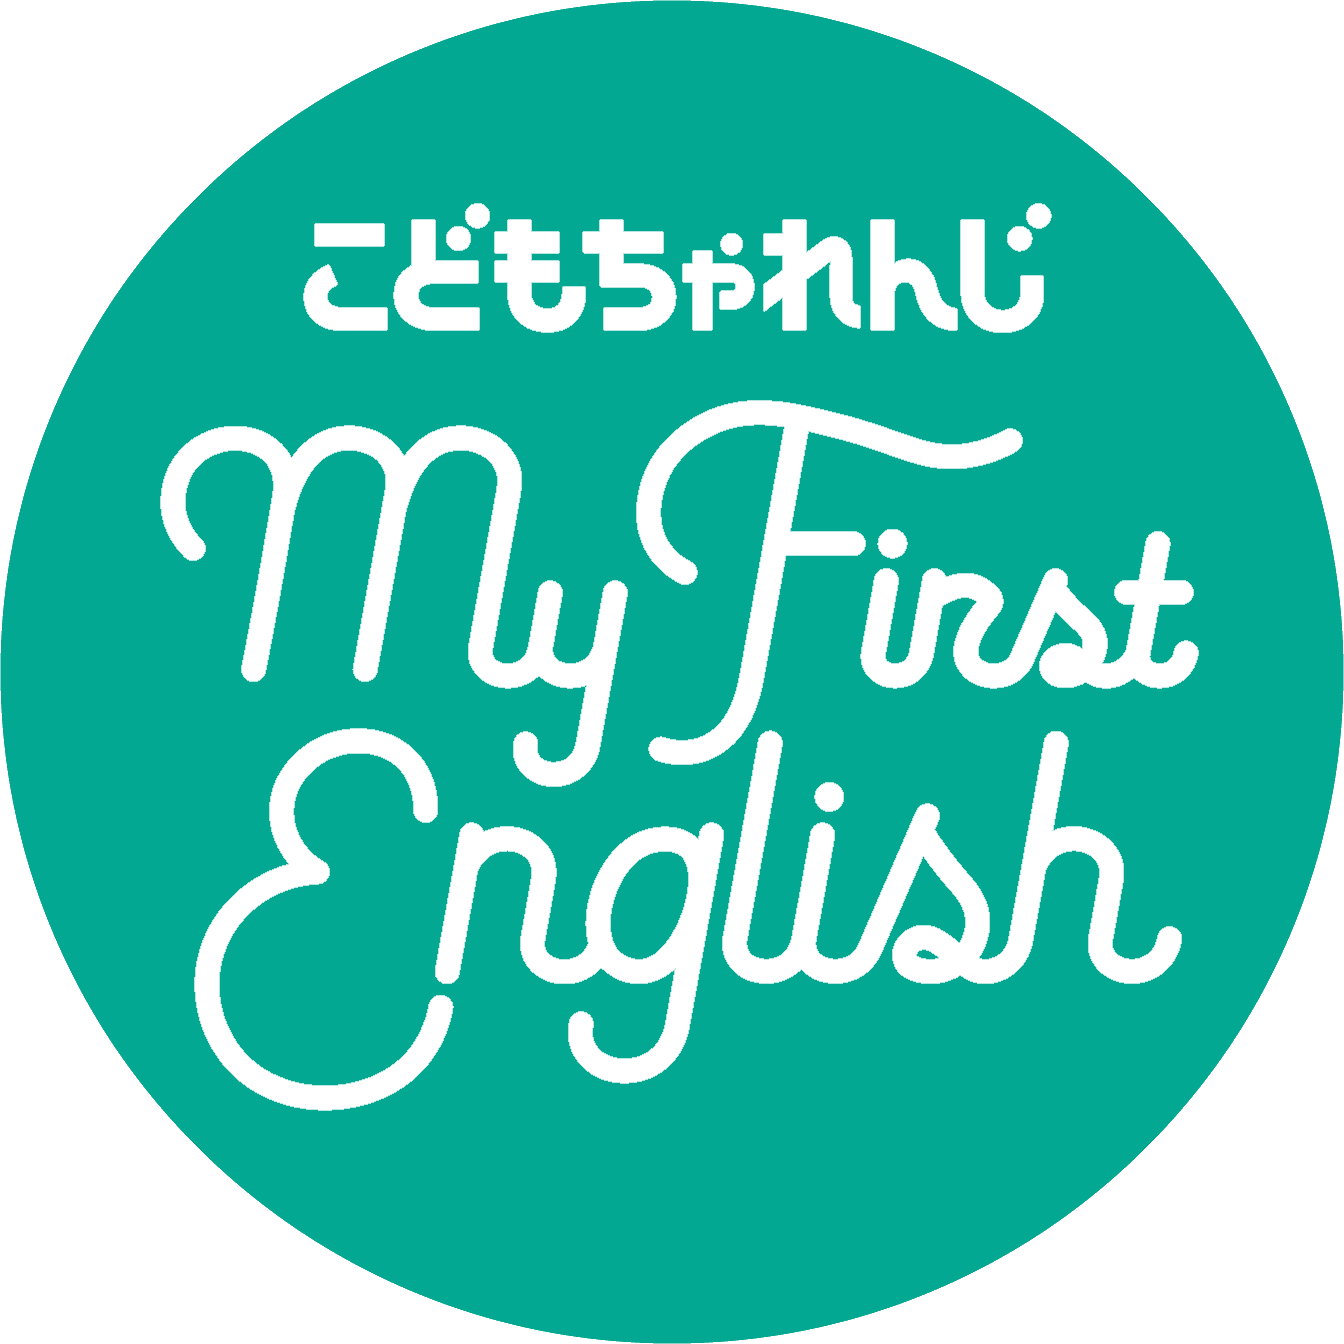 My First English